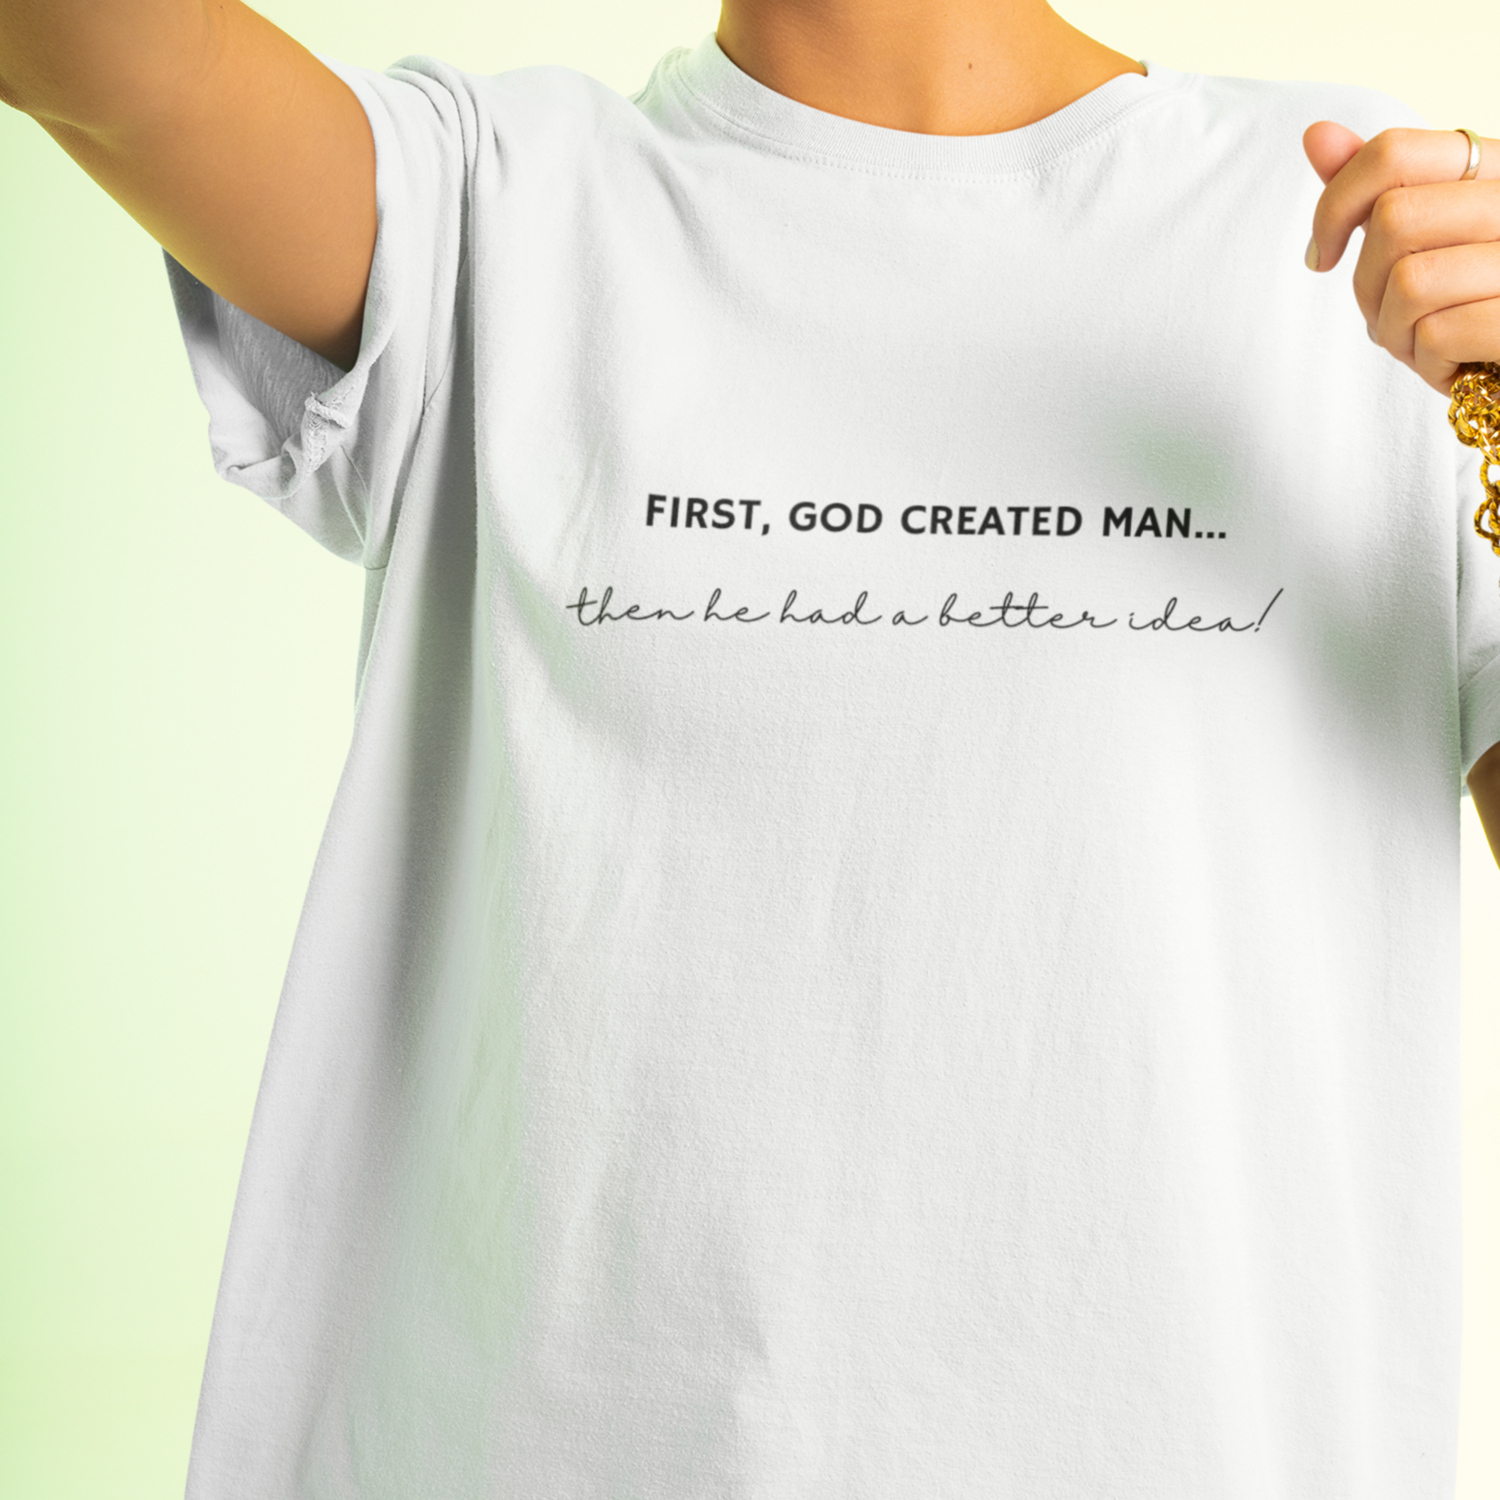 God Created Man White T-Shirt Unisex - Small - 5xl